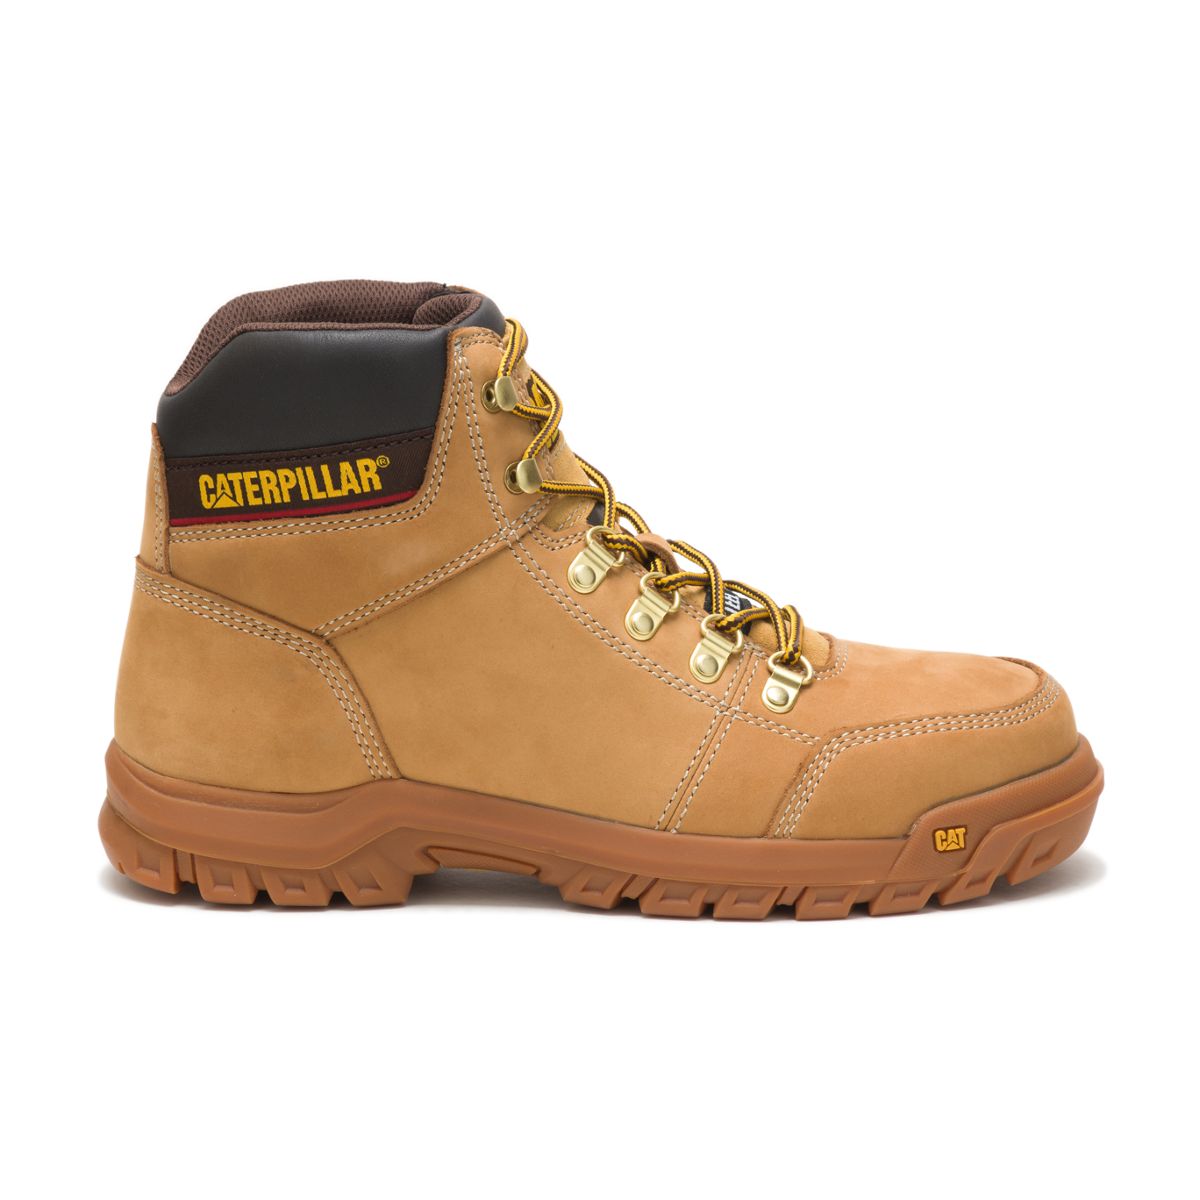 Caterpillar Work Boots - Comfortable Work Shoes